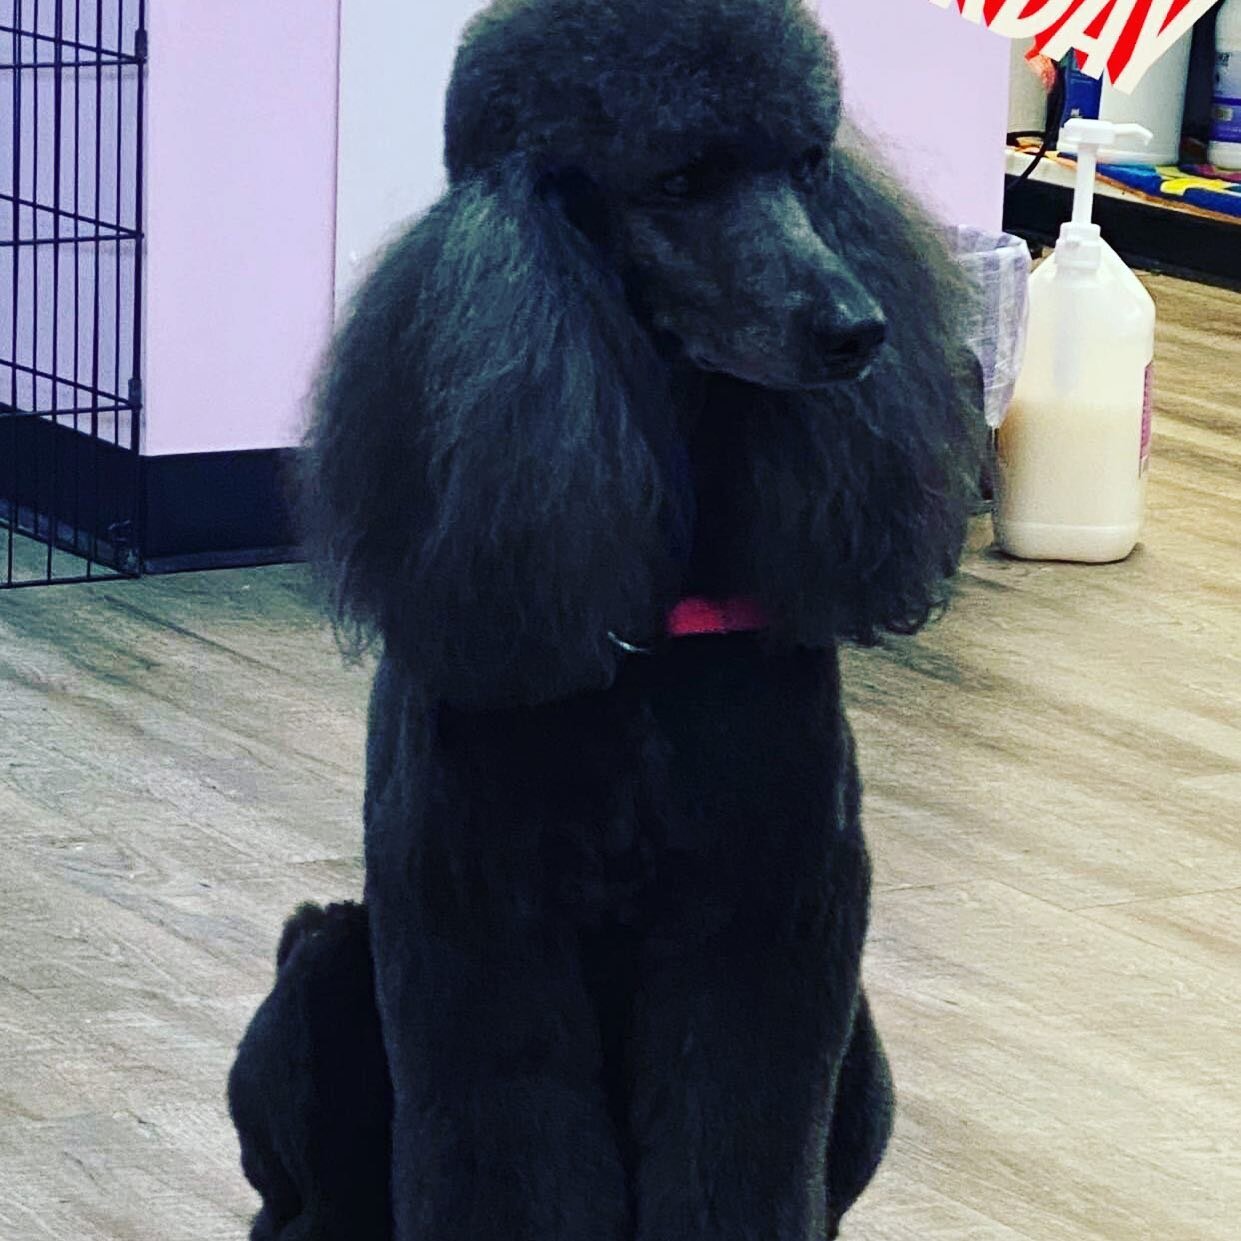 Whisper haircut day. 
#dogsofinstagram #poodlesofinstagram #standardpoodle #standardpoodlesofinstagram #doggroomersofinstagram